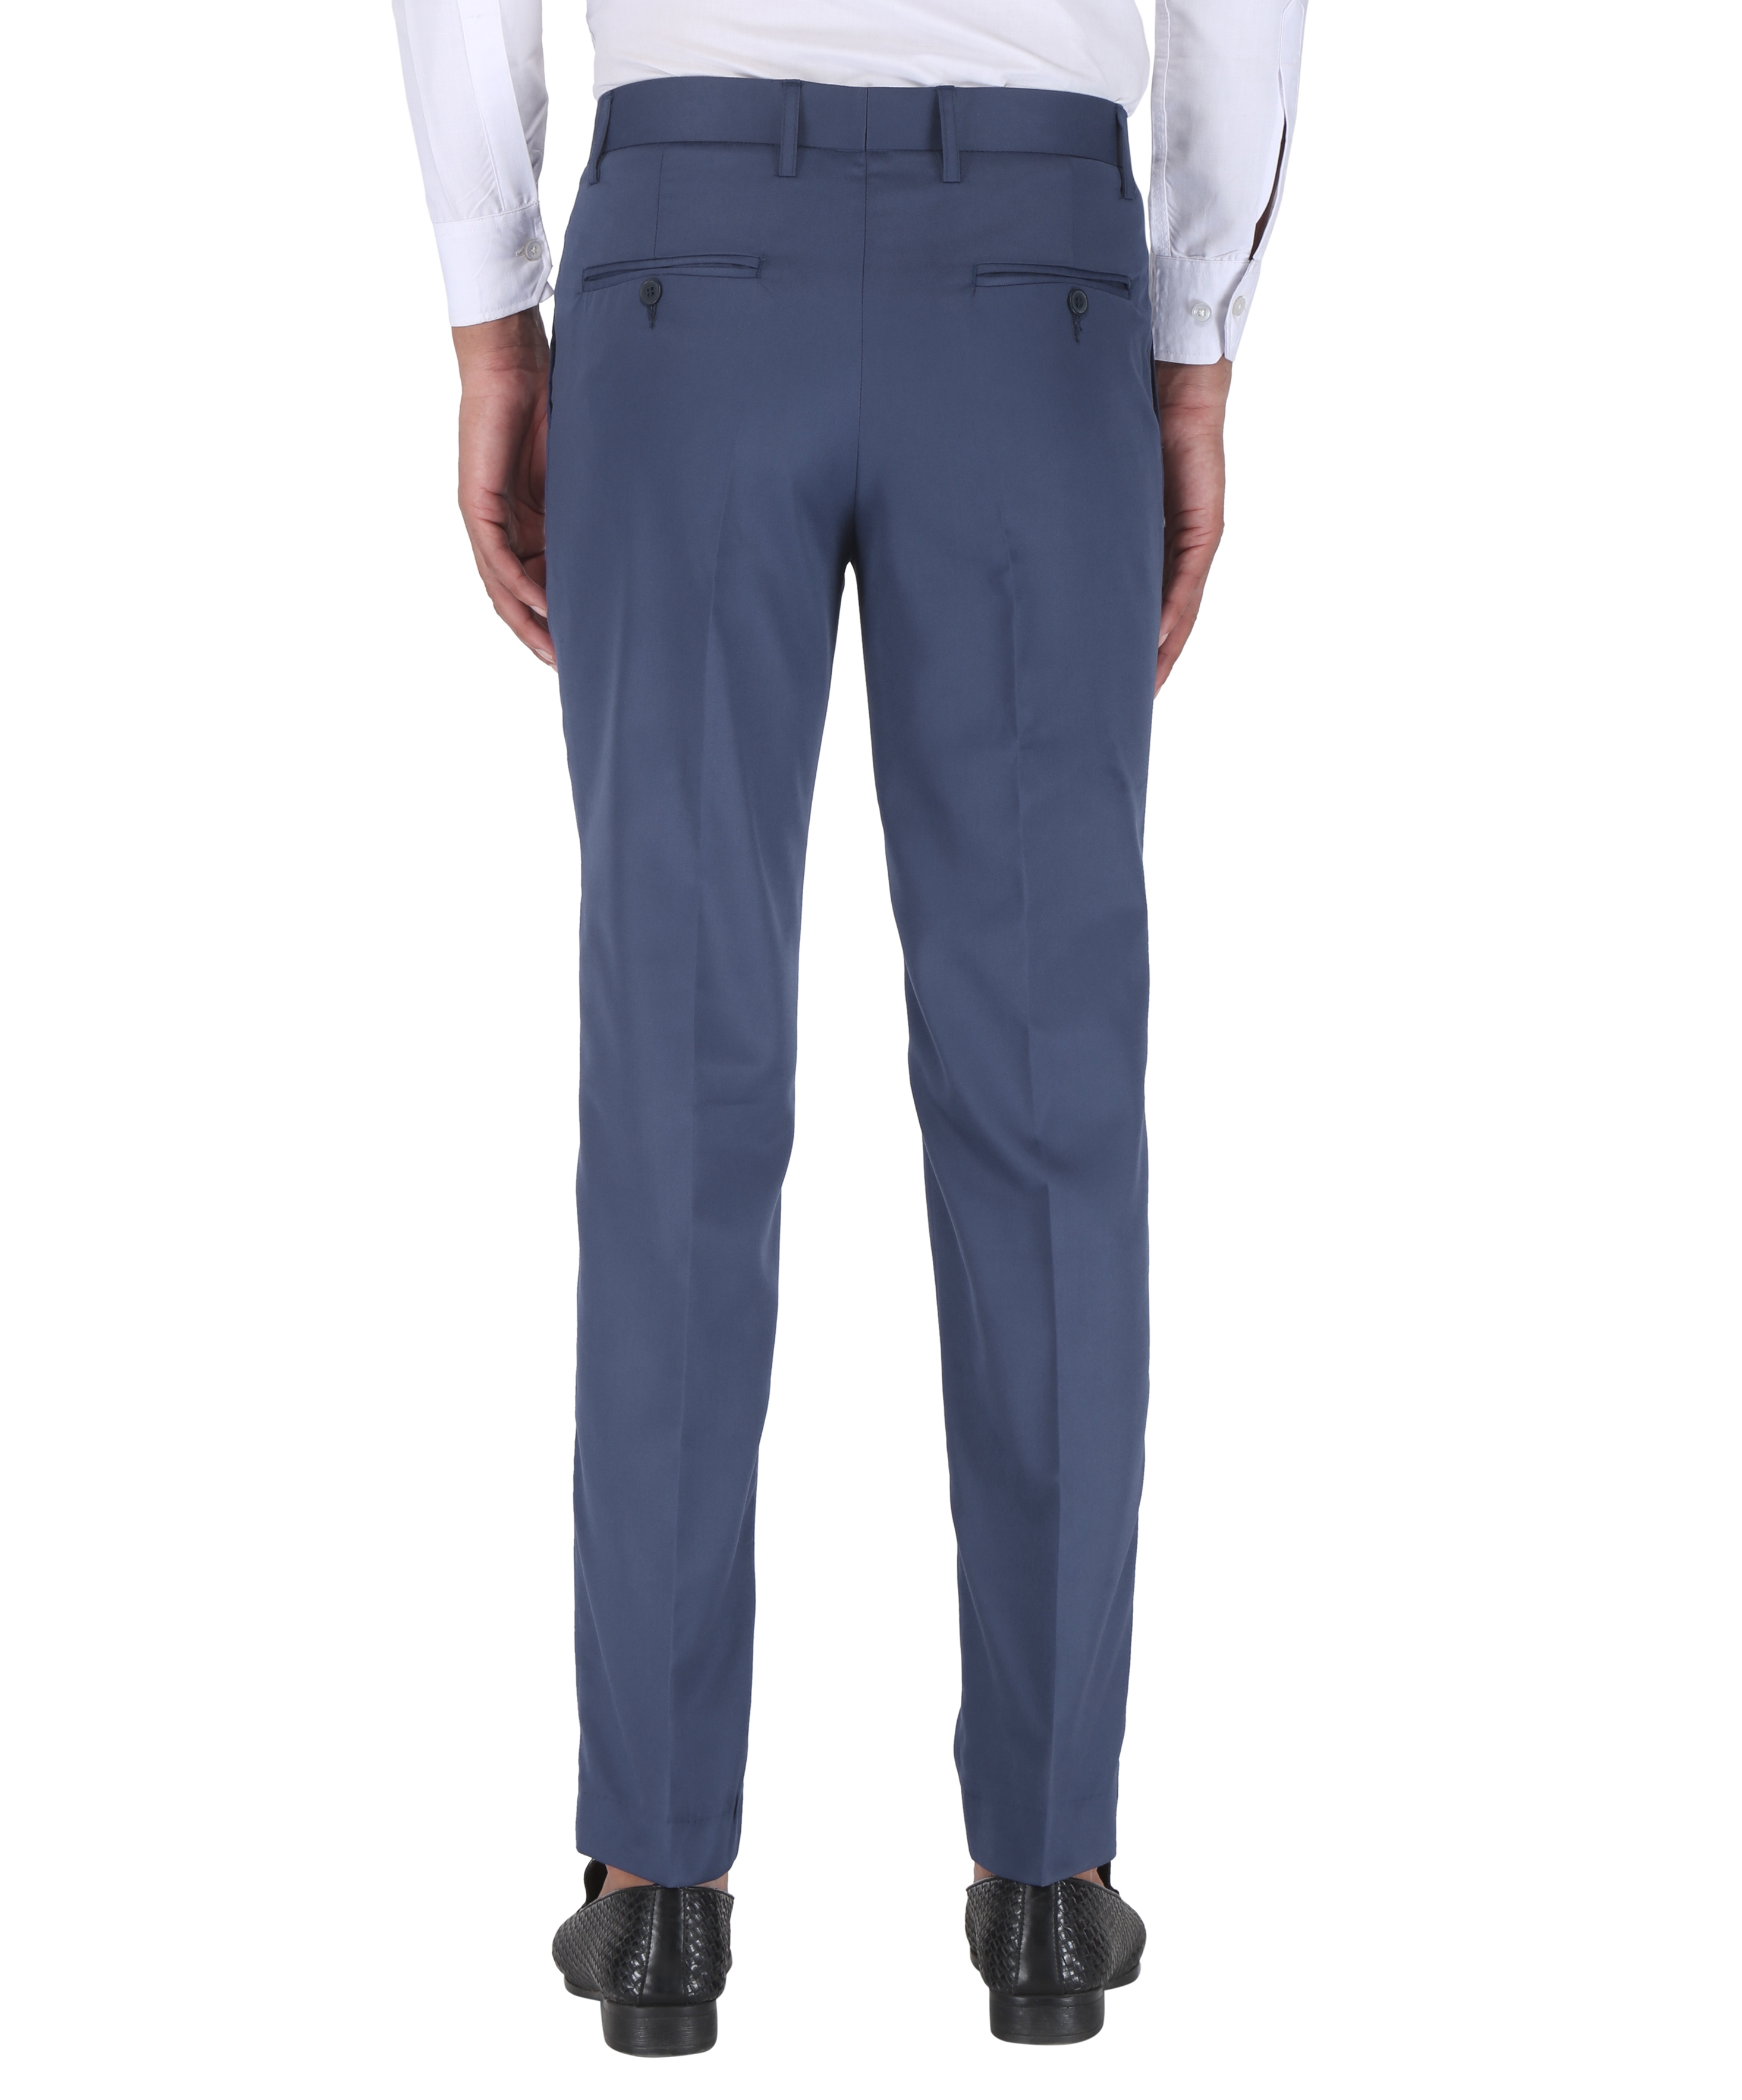 CHARLIE CARLOS | Blue Men's Contemporary Reguler Leg Business Pants in Virgin PolyViscose Regular Fit Formal Trousers/Pants 1